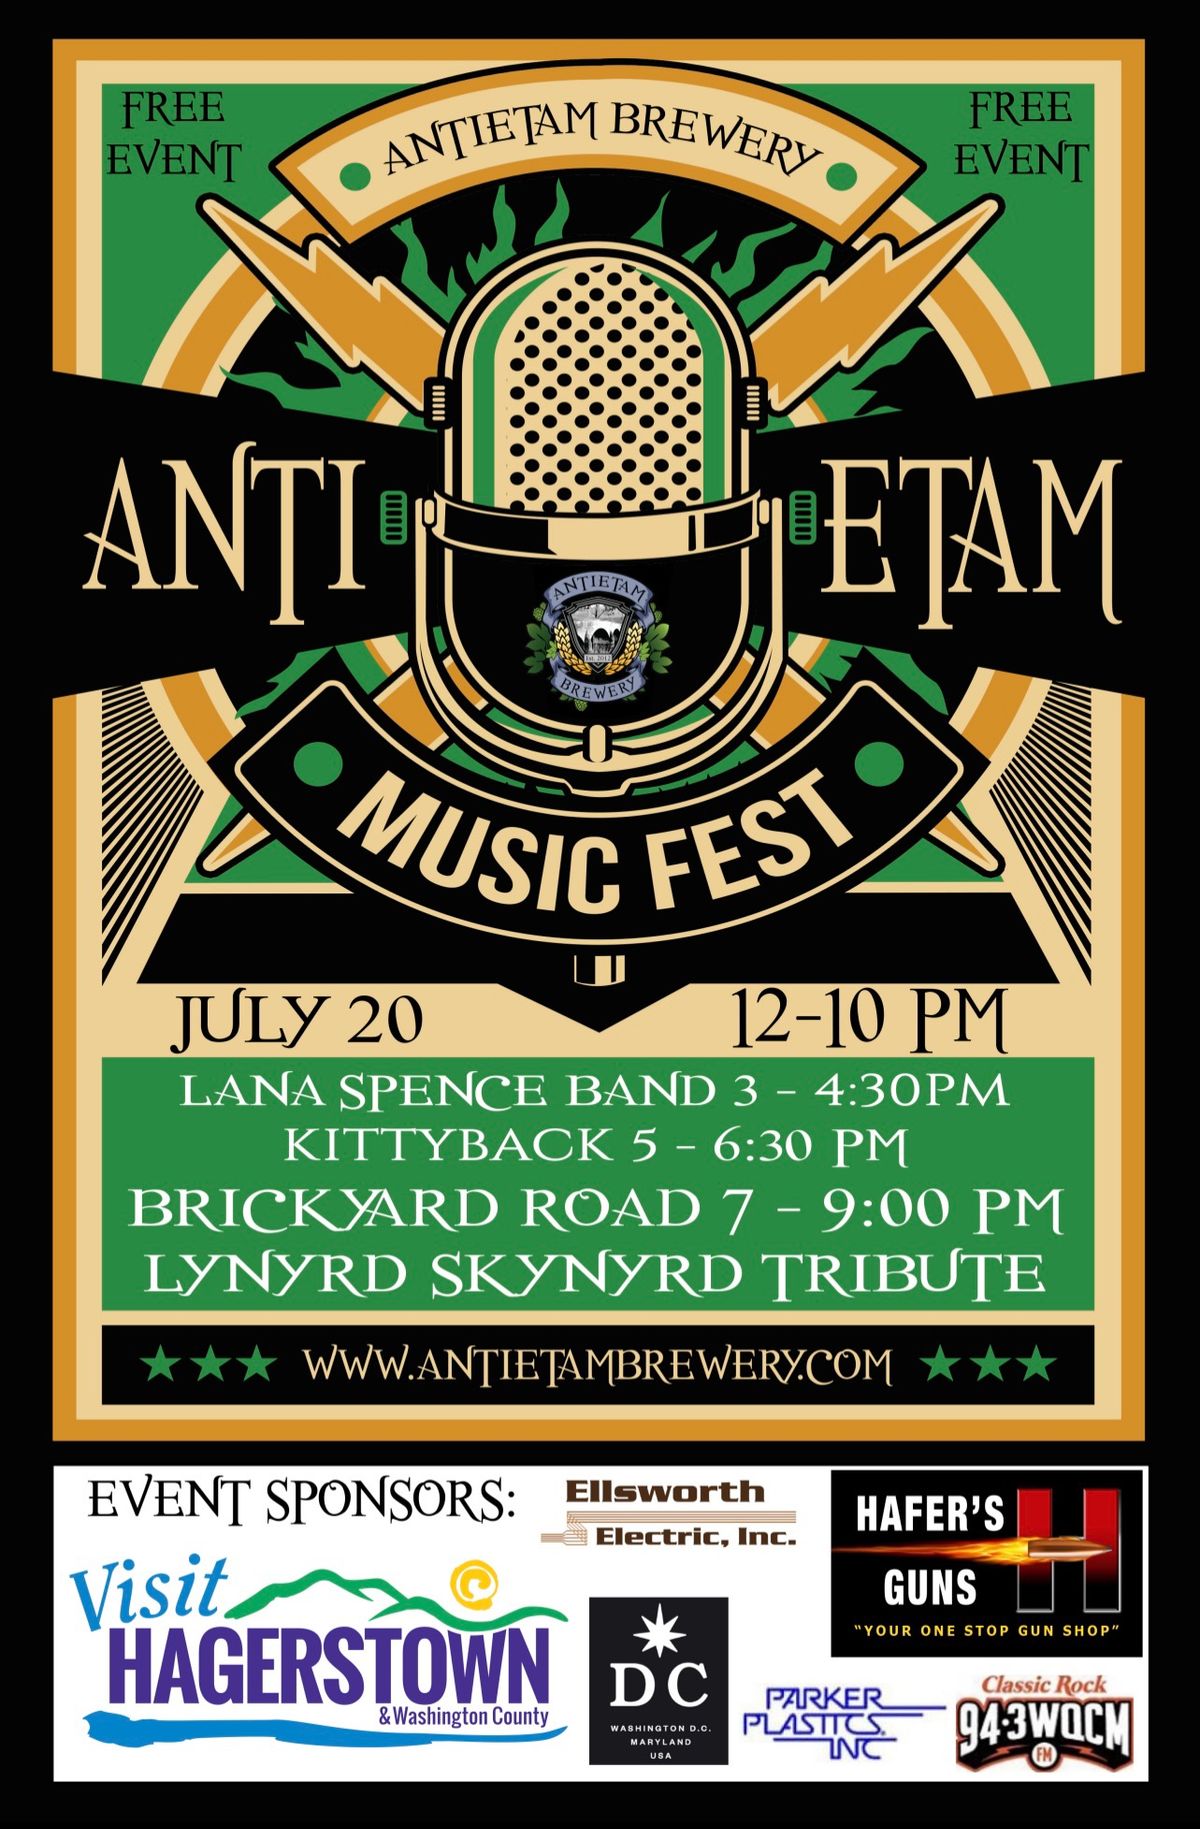 Antietam Music Fest July 20th 